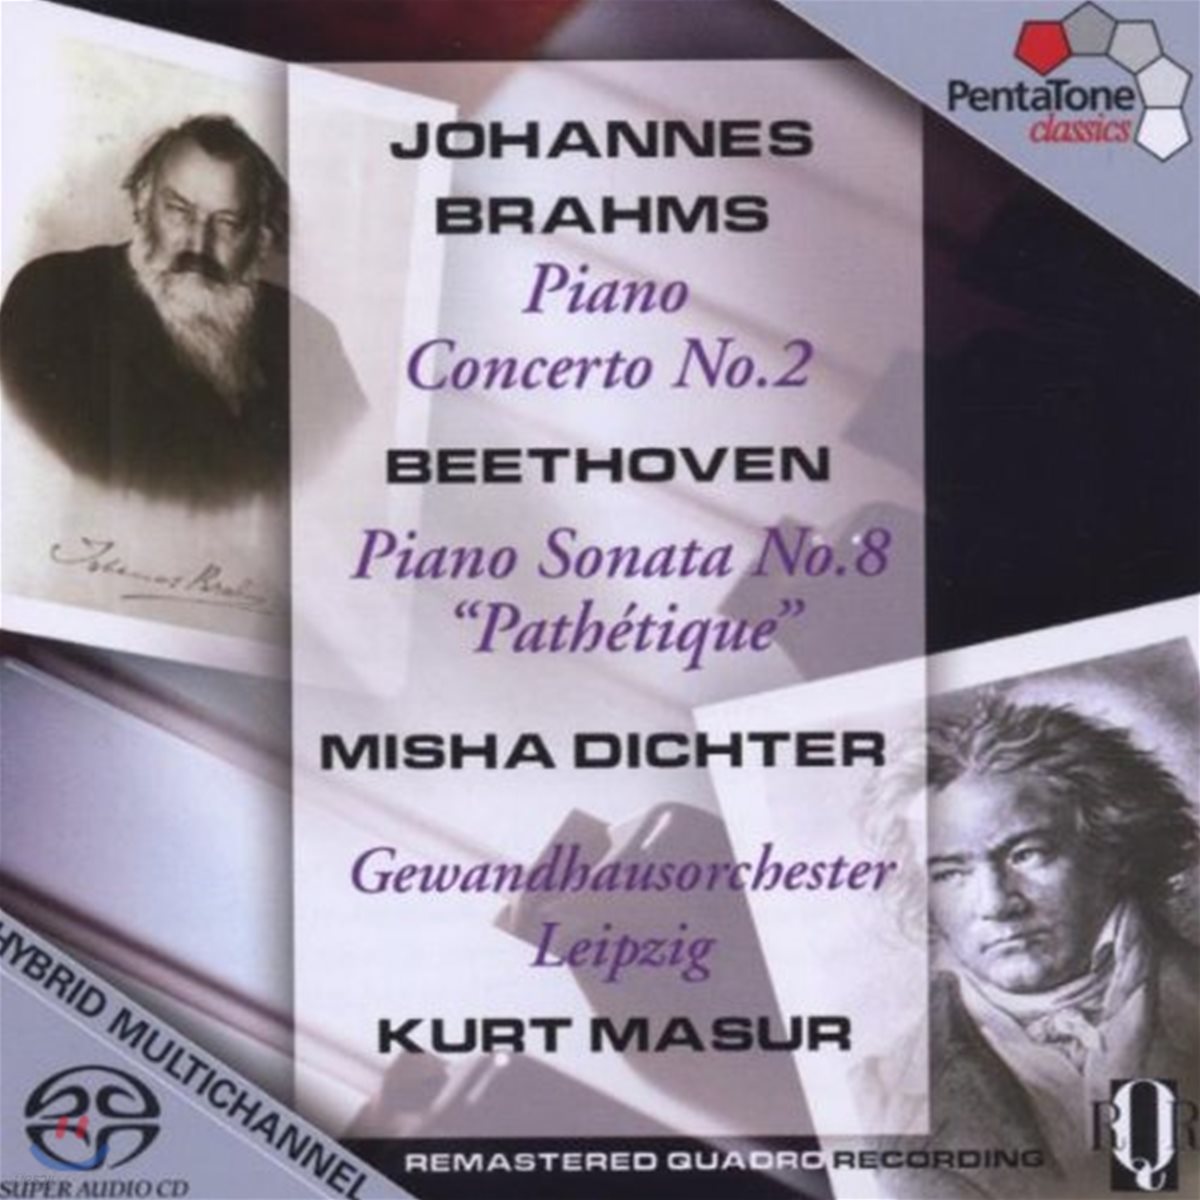 Kurt Masur / Misha Dichter 브람스: 피아노 협주곡 2번 (Brahms:Piano Concerto No. 2)